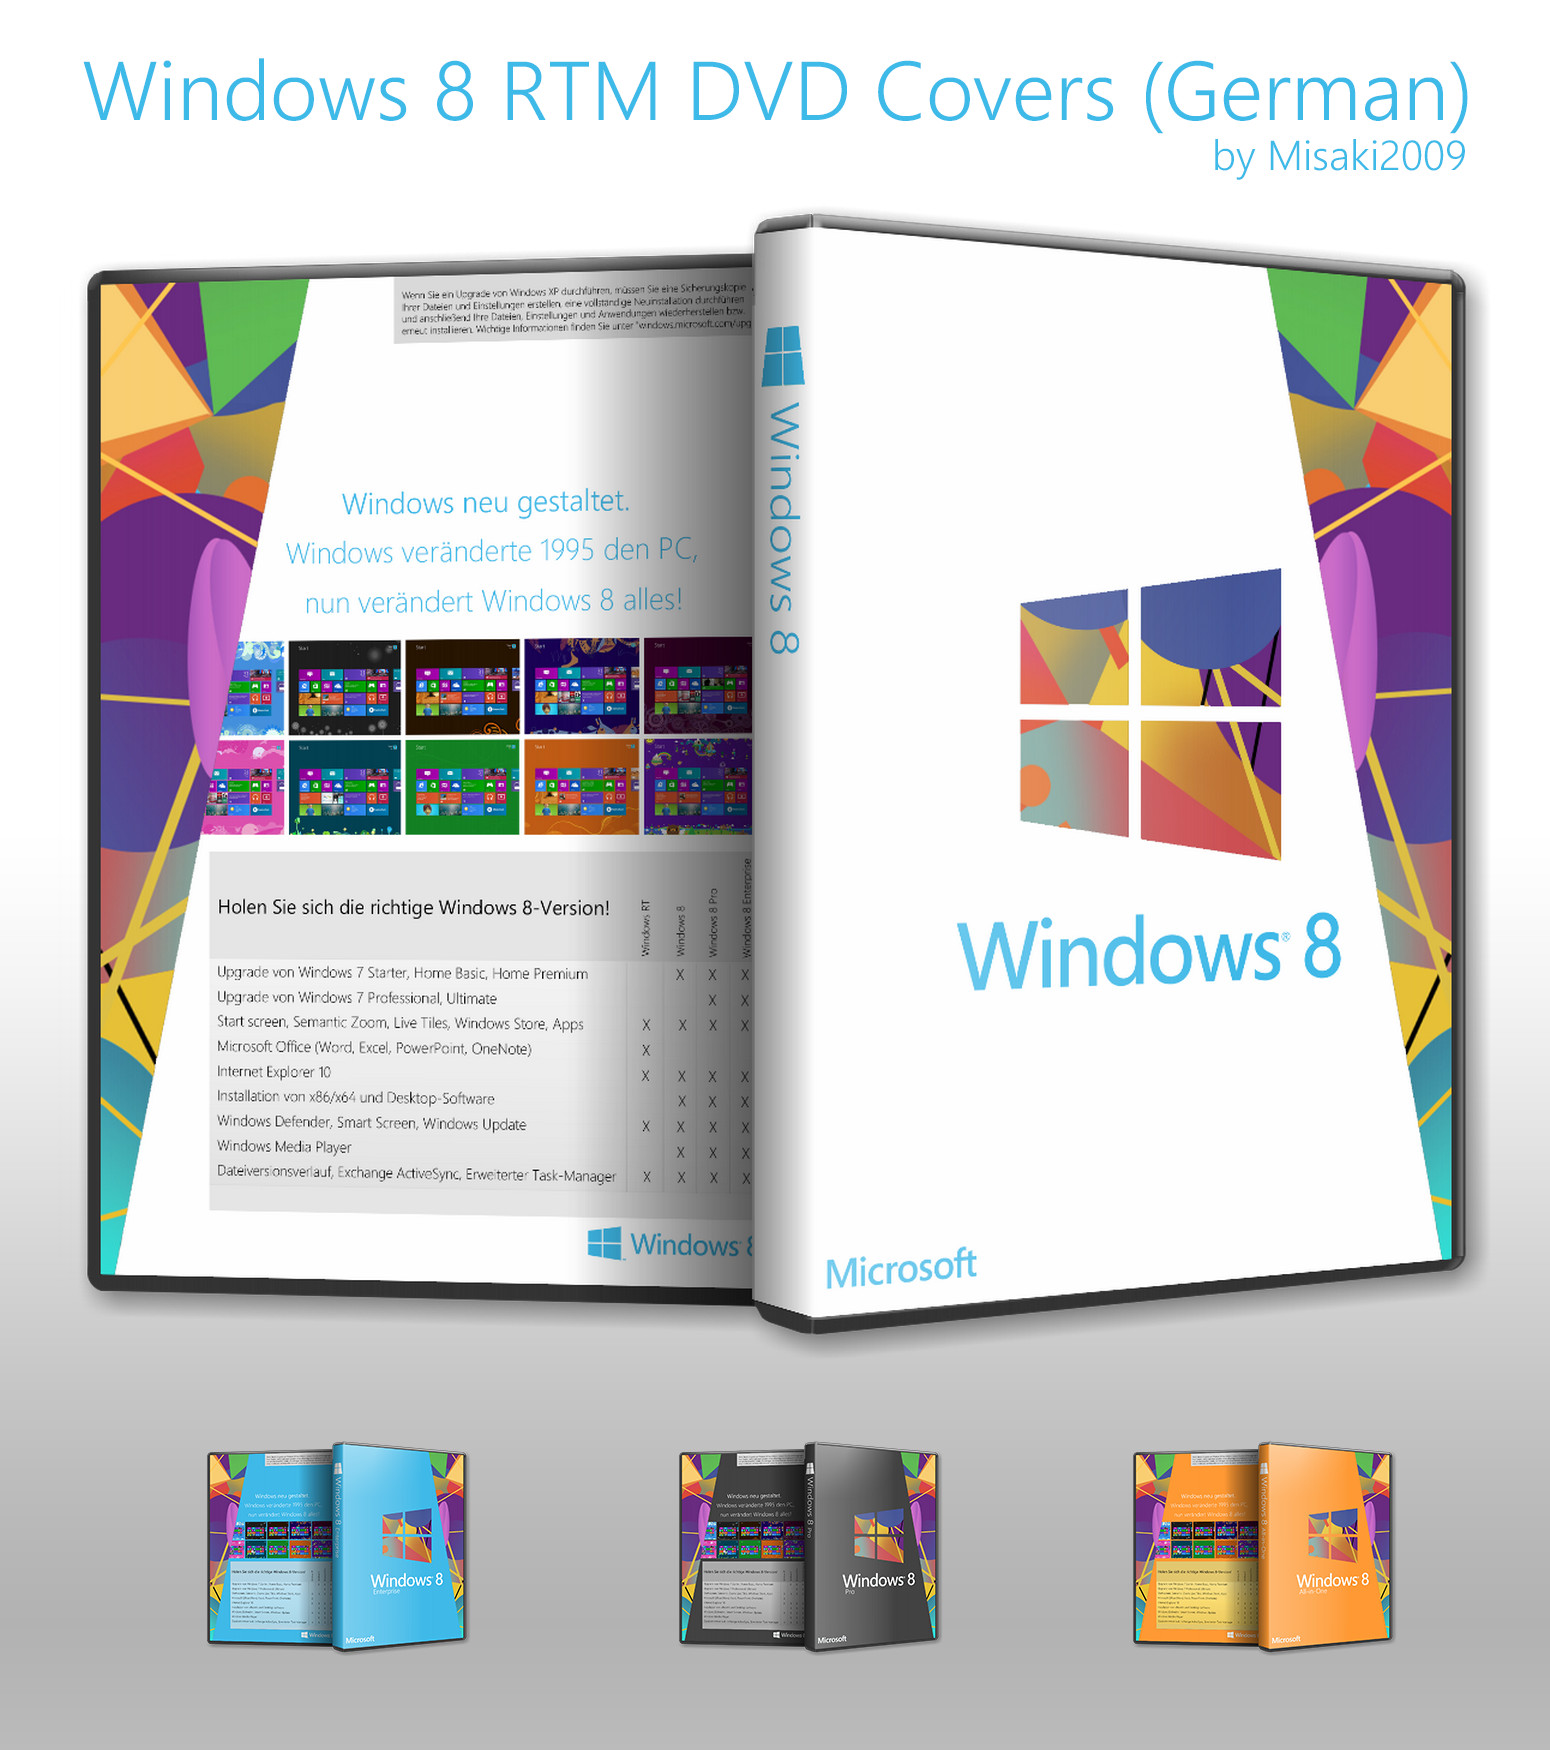 microsoft office starter download windows 8